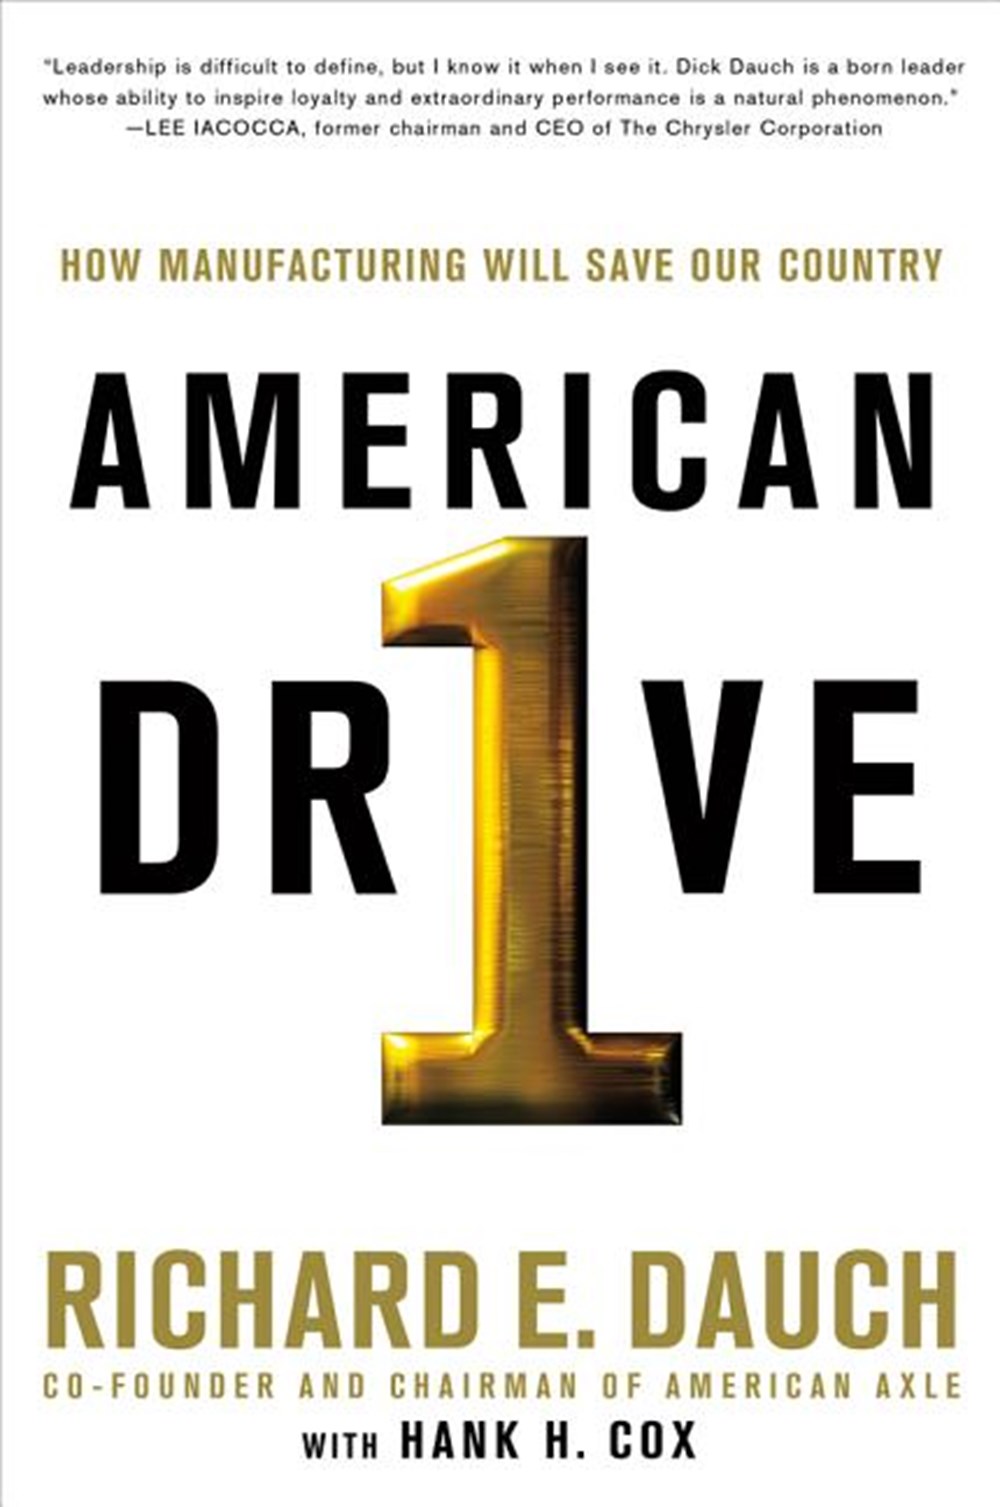 American Drive